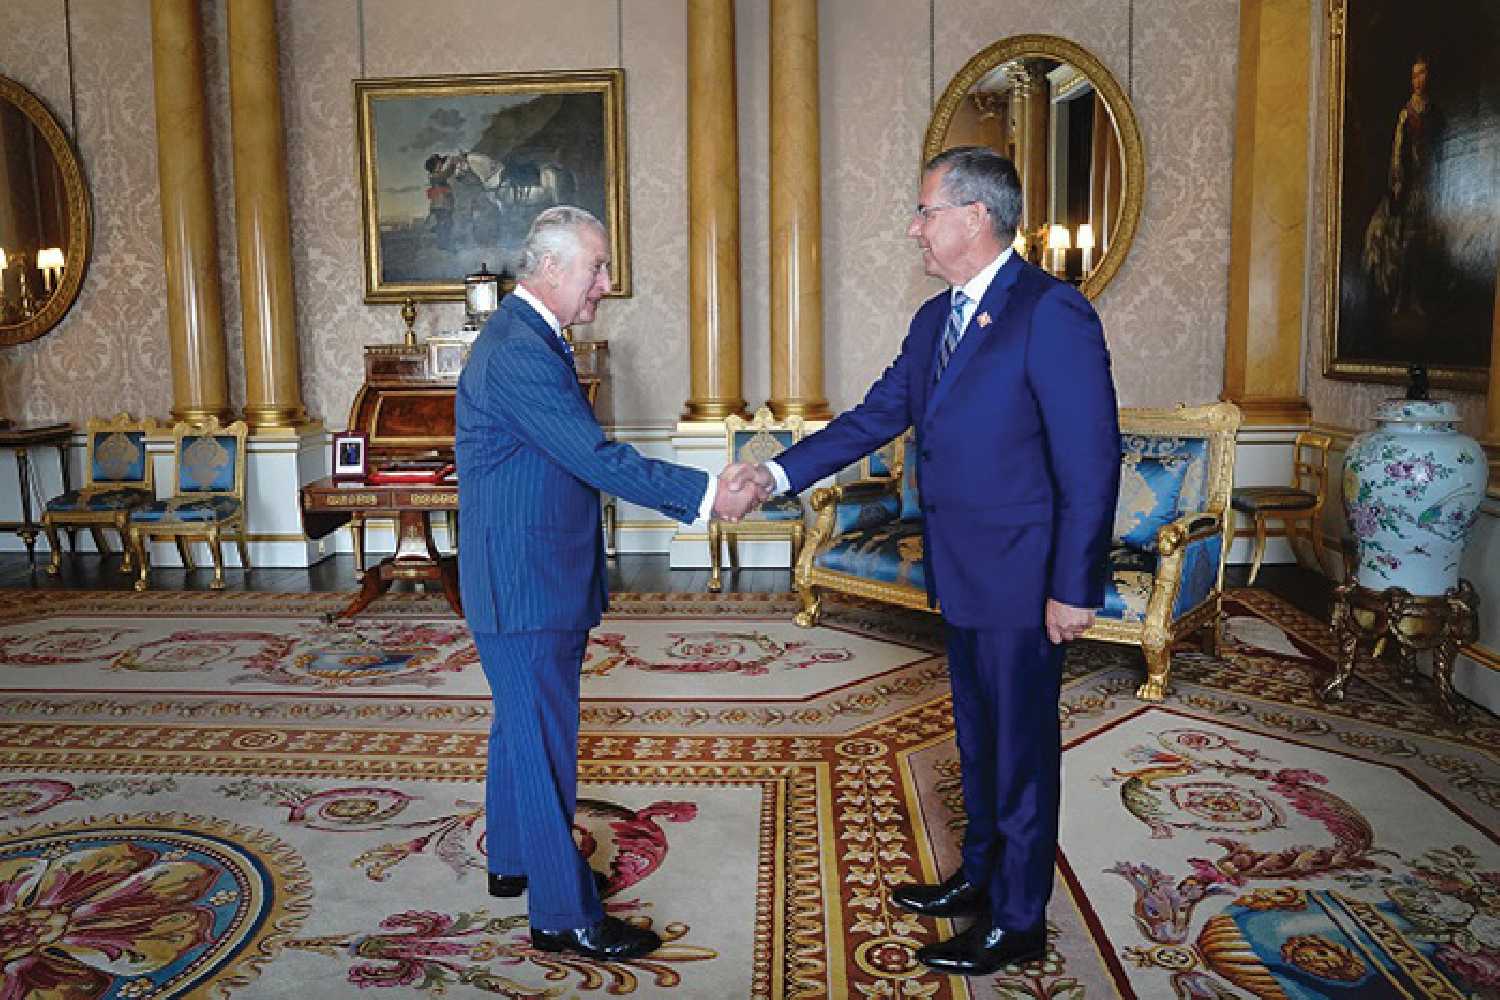 Saskatchewan Lieutenant Governor Russ Mirasty meeting with King Charles III at Buckingham Palace.